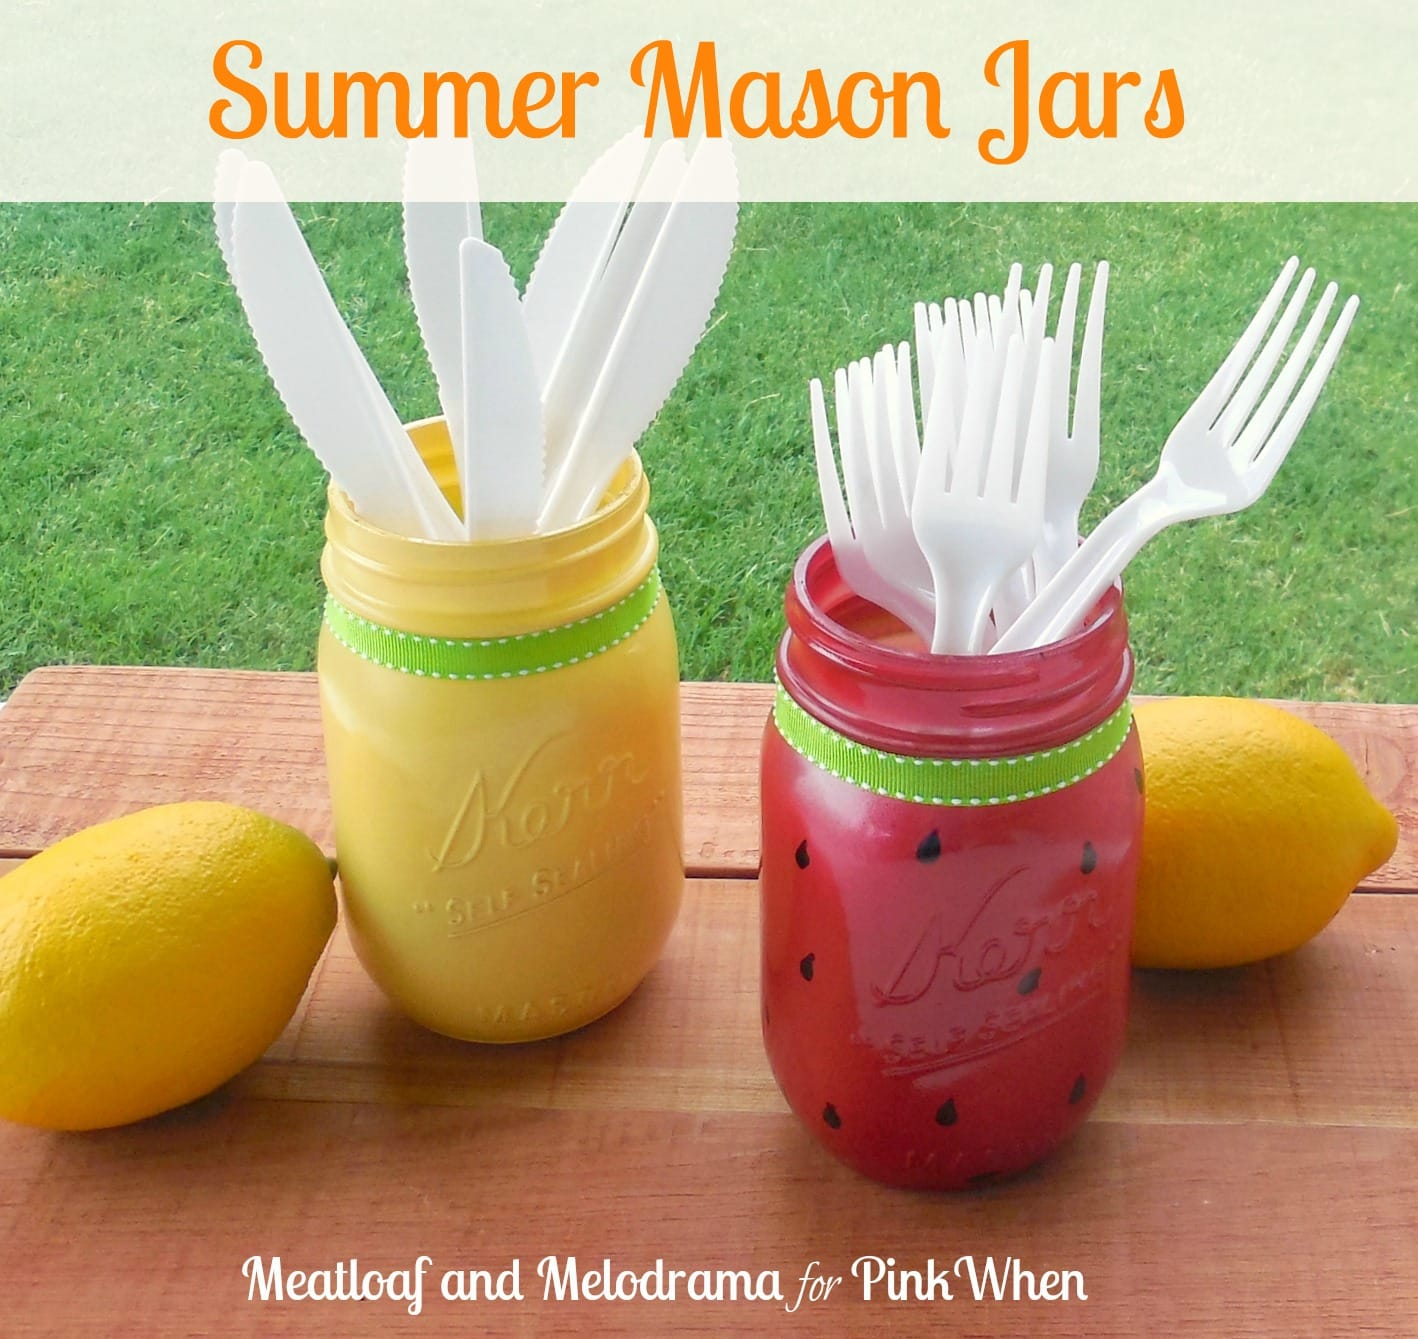 Summer Mason jars